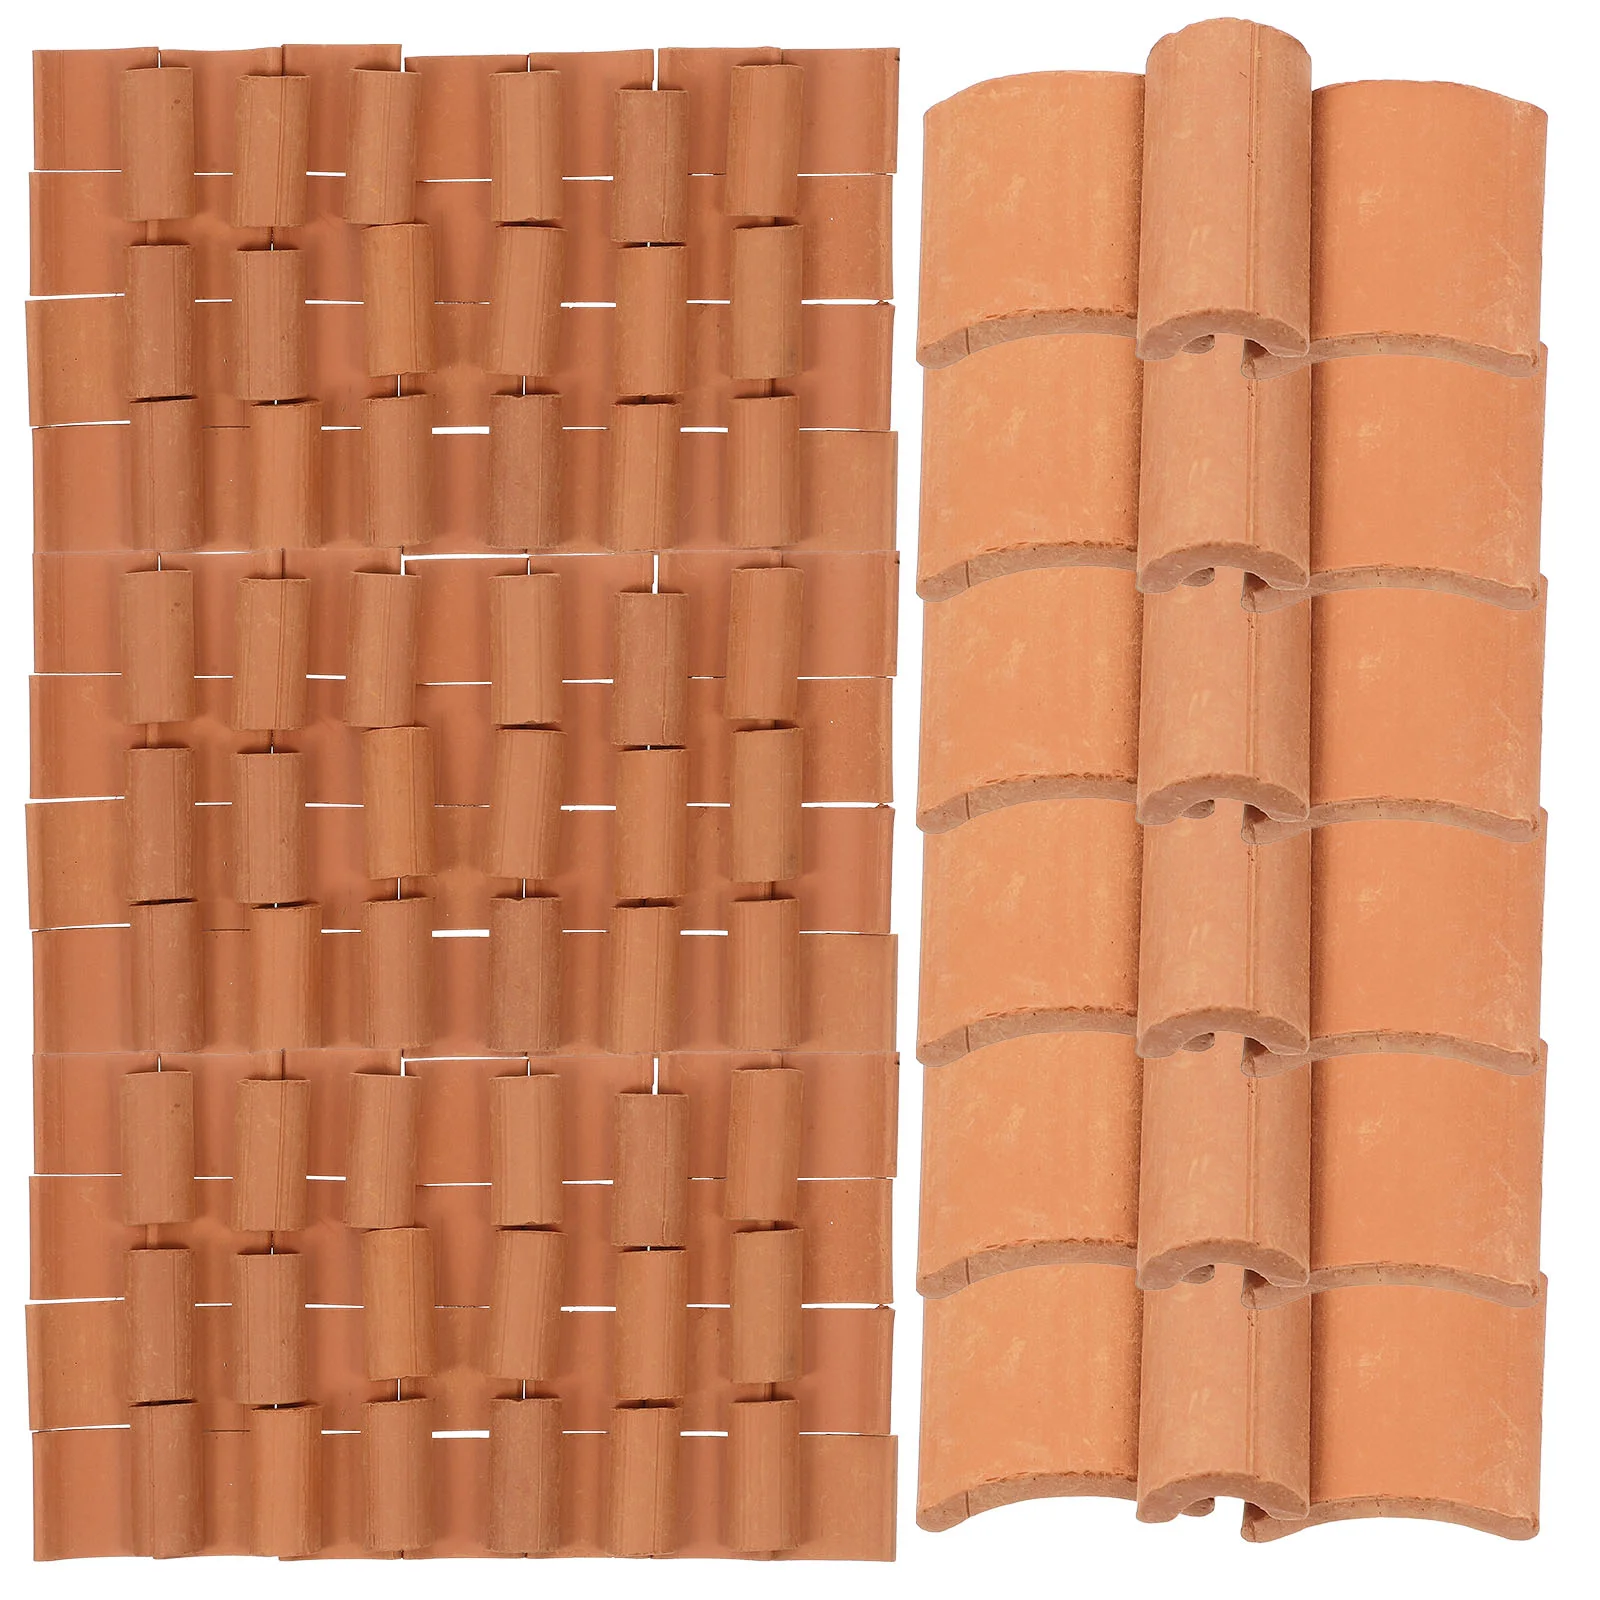 

120 Pcs Building Blocks Tile Model Mini Roof Tiles Sand Table Decors Miniature Clay Creative Models DIY Layout Child